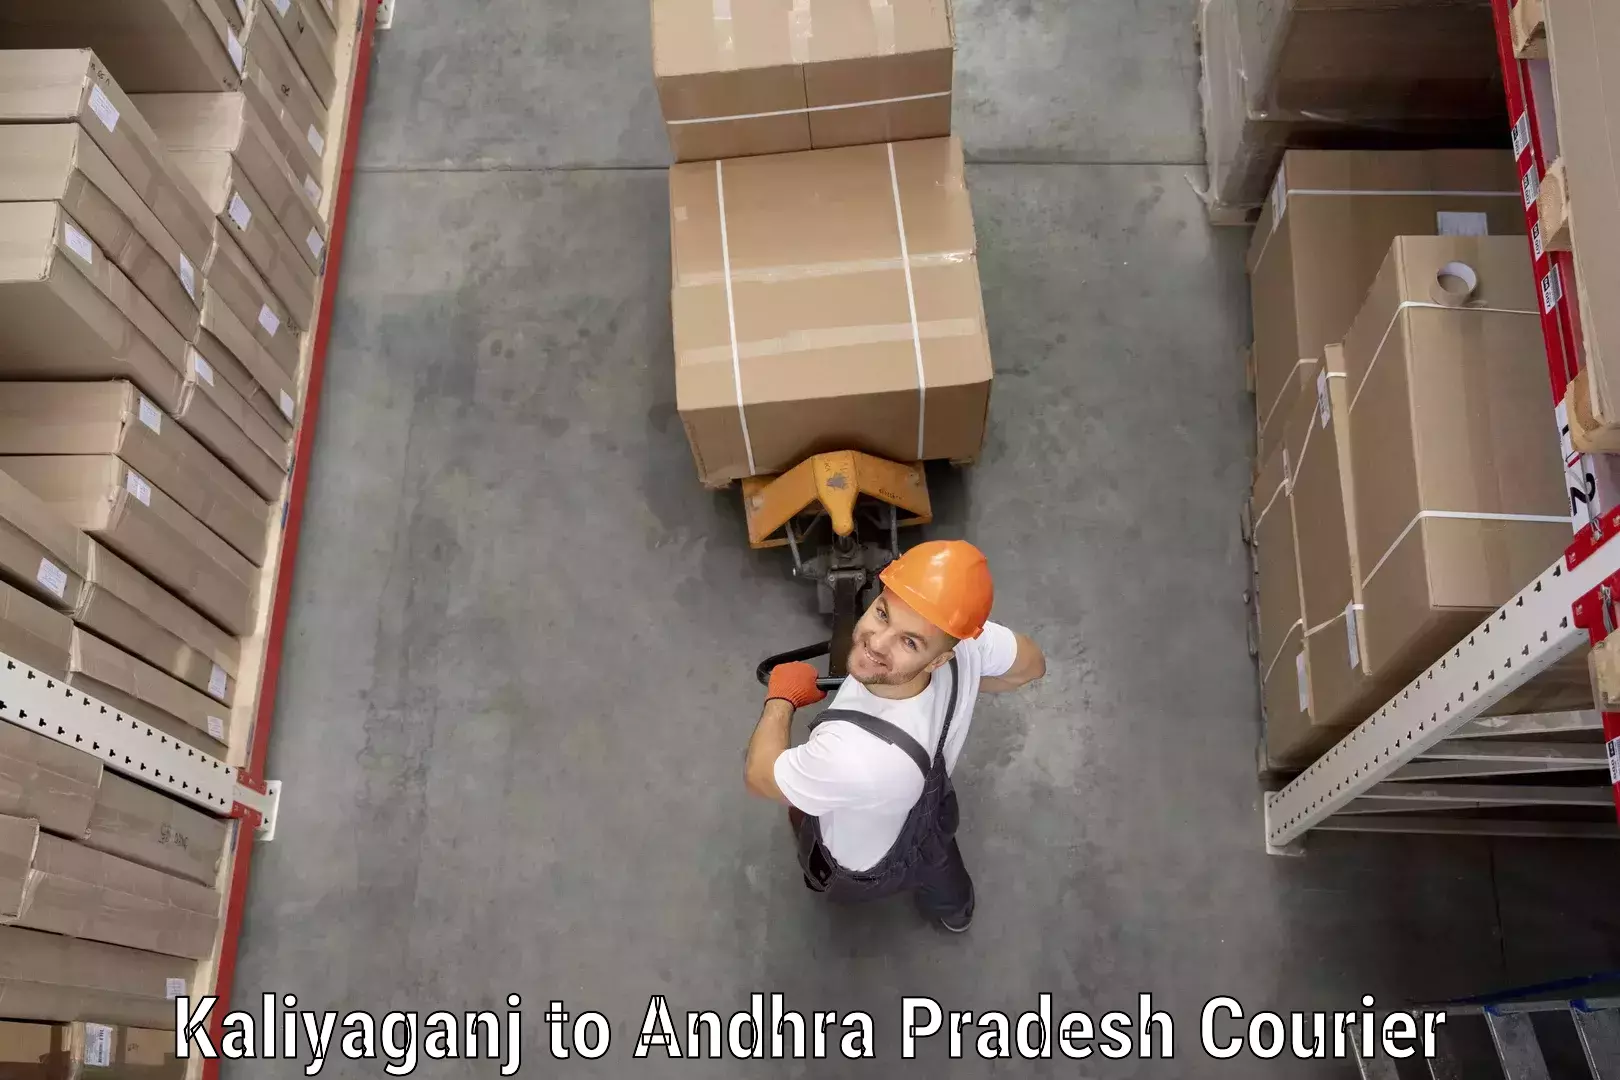 Courier service efficiency Kaliyaganj to Puttur Tirupati